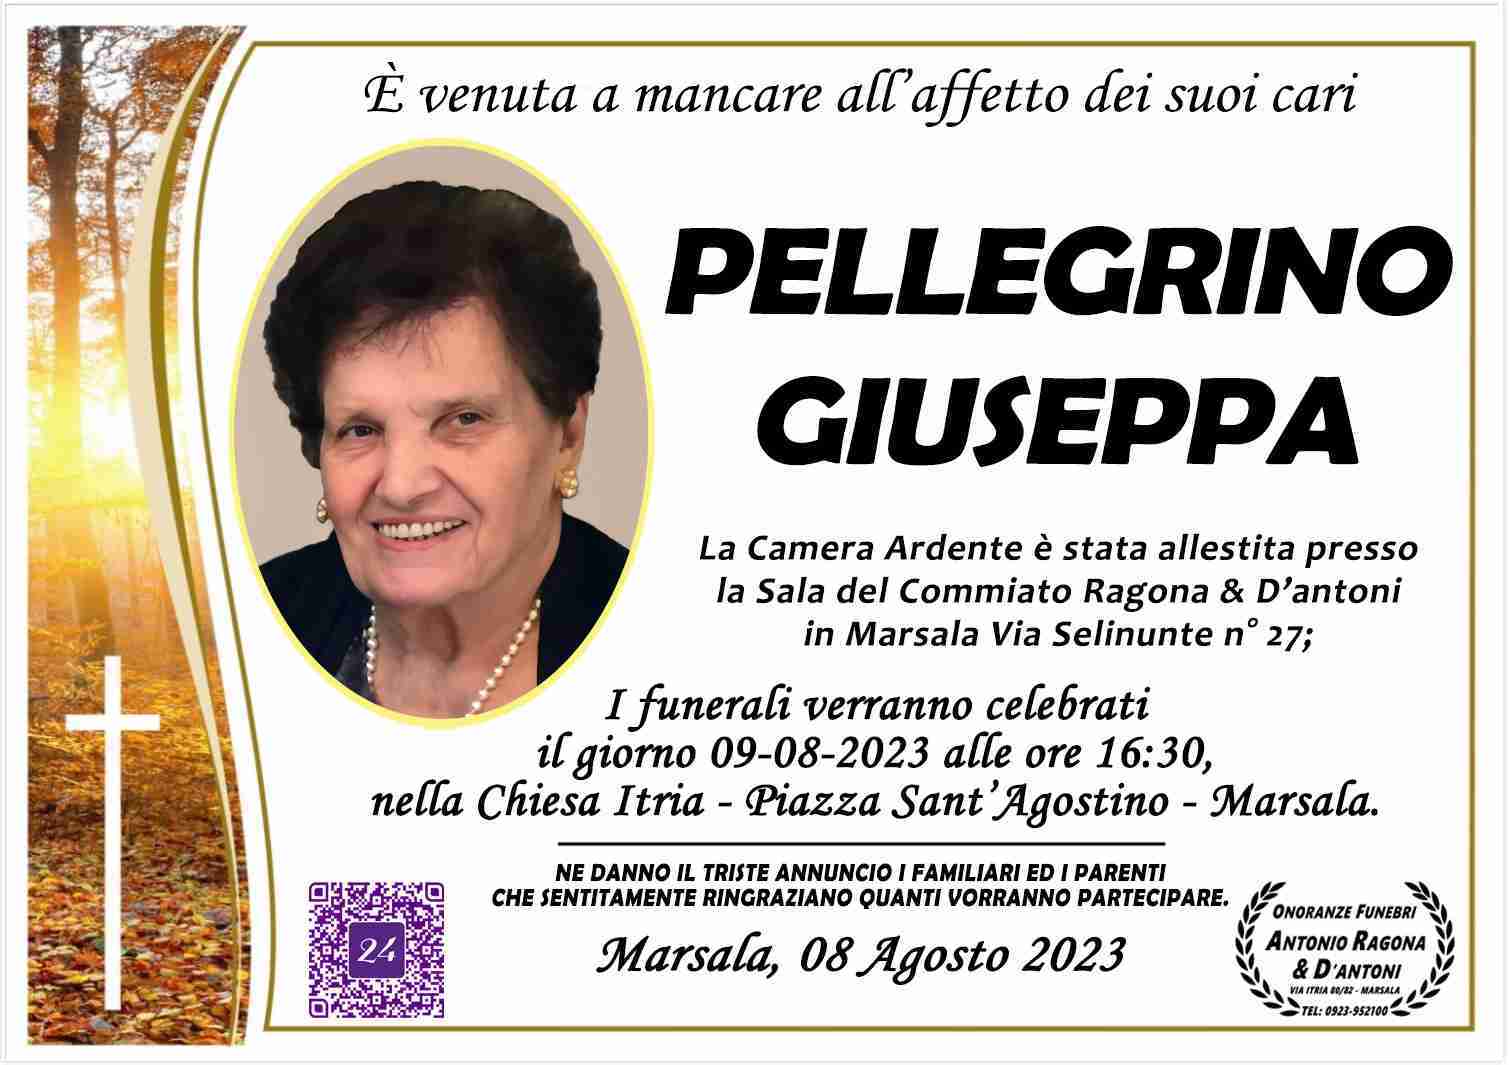 Giuseppa Pellegrino